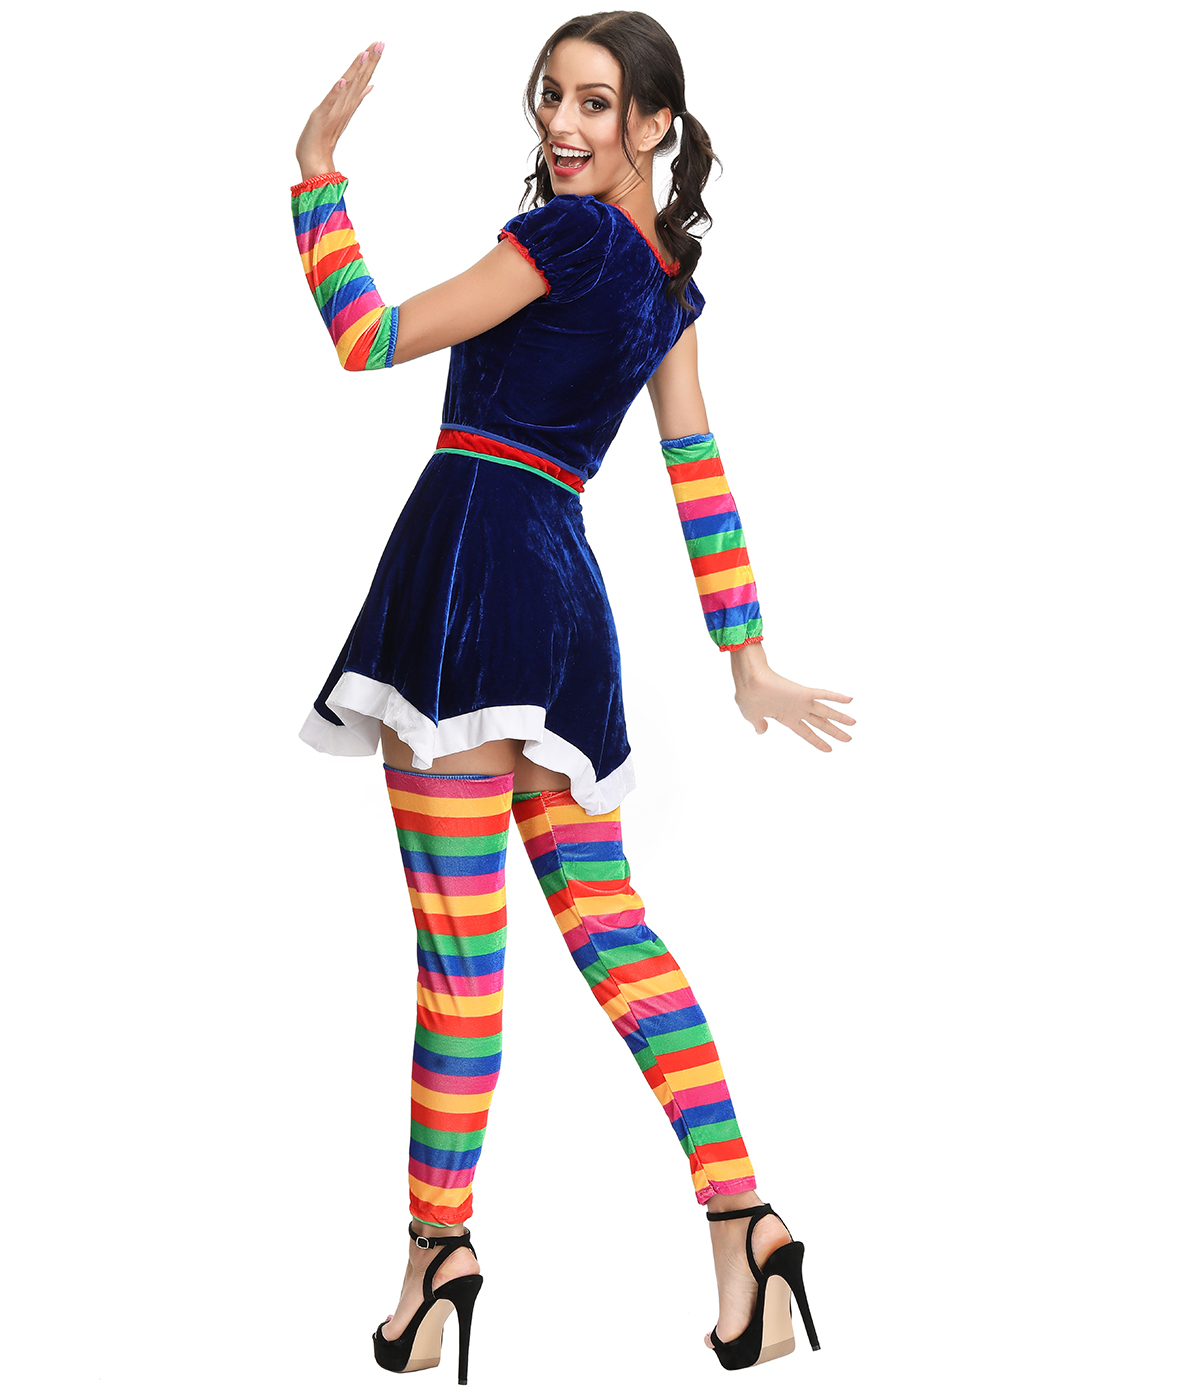 F1909 sexy clown costume for women